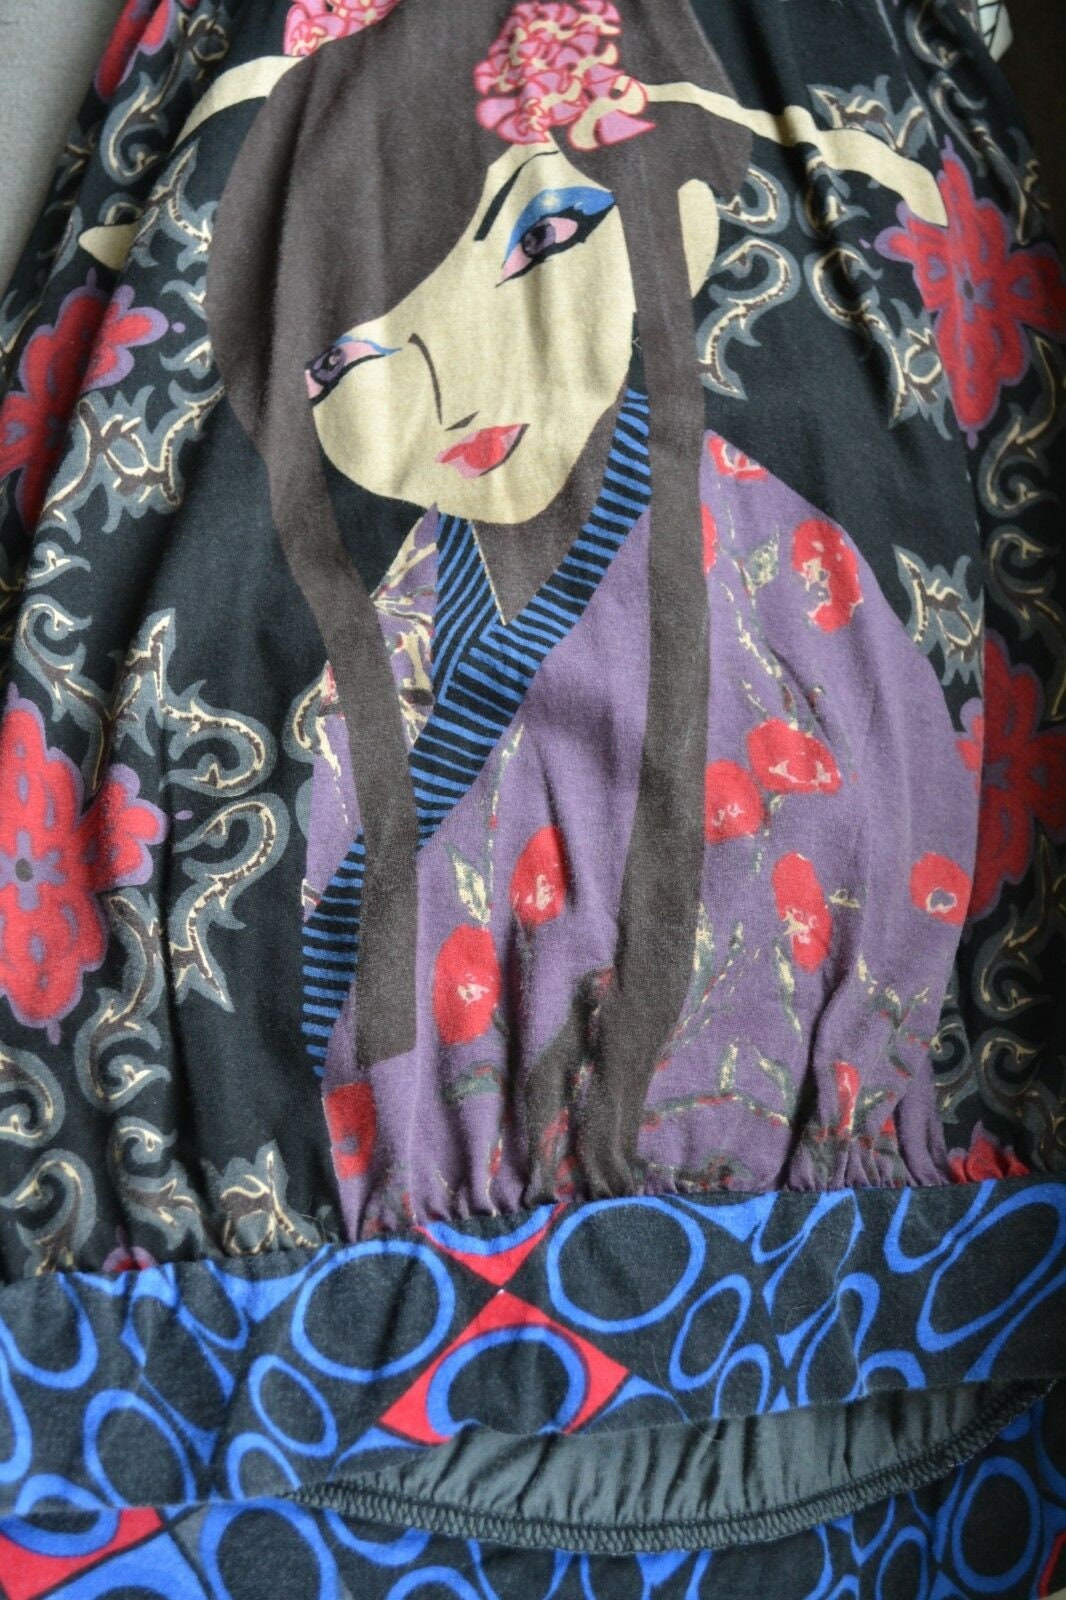 Desigual All Together Black Vintage Japanese Lady Cotton Dress XS,embroidery.stunning designer item Etsy